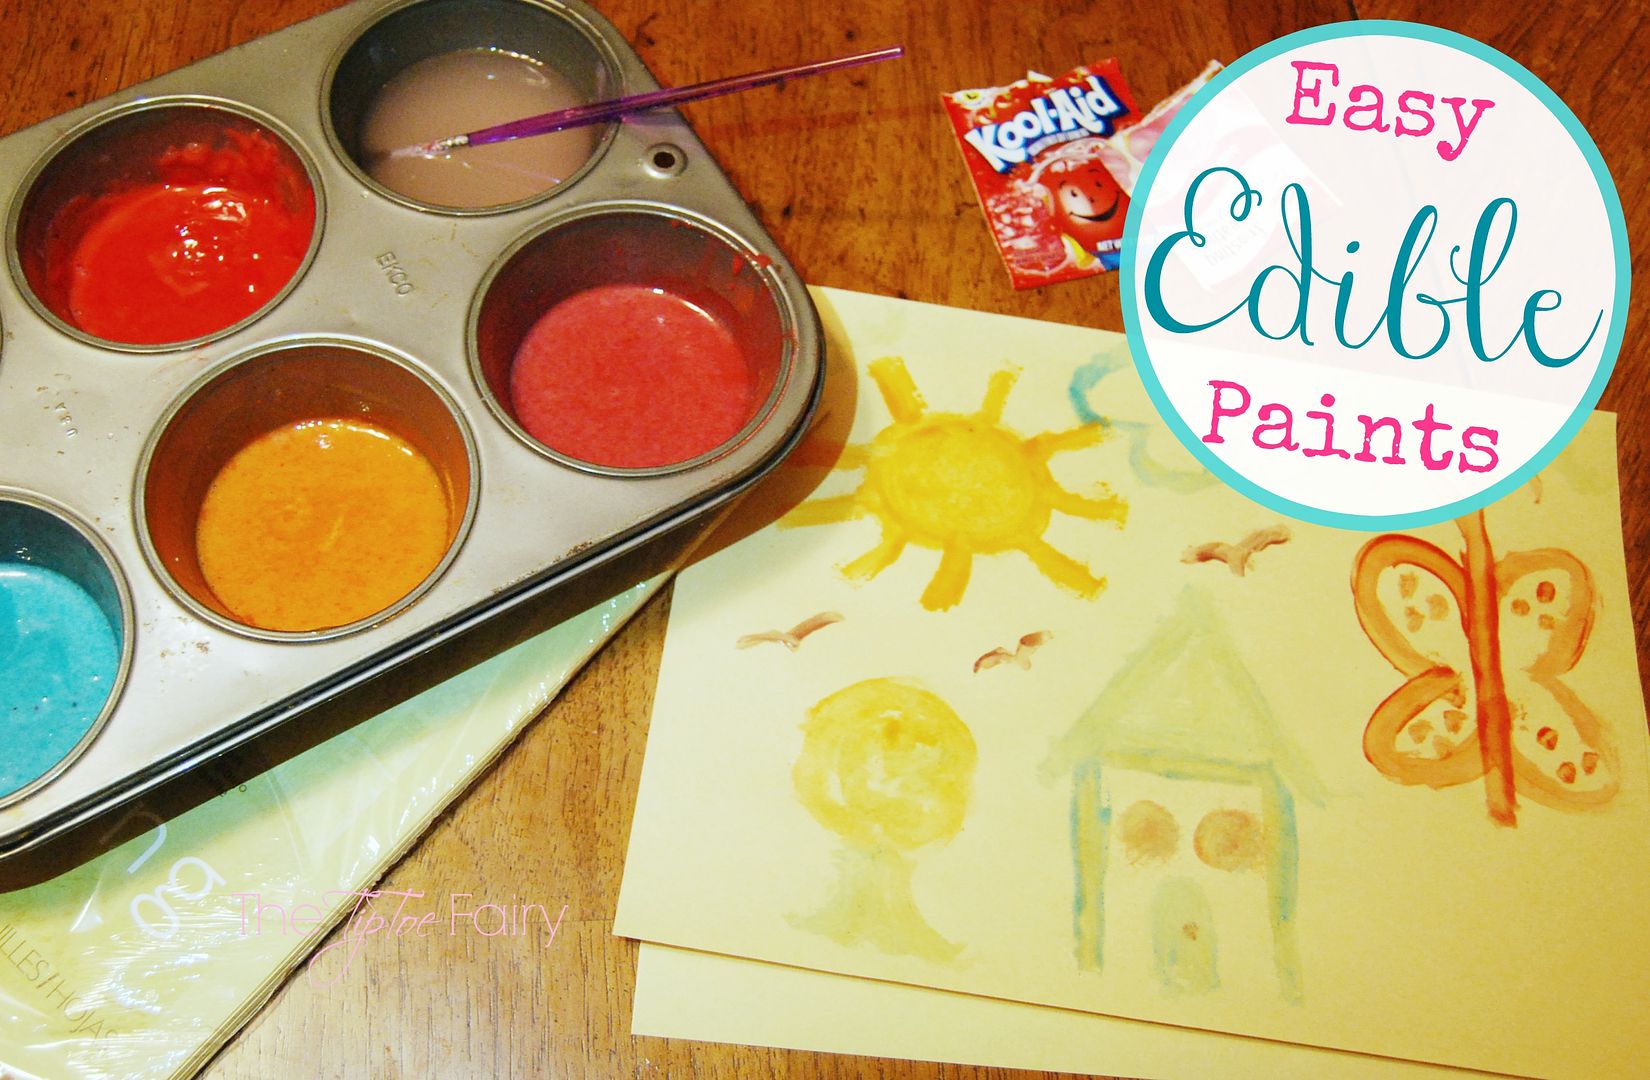 Easy Edible Paints | The TipToe Fairy #edible #crafts #paint #kidsactivities